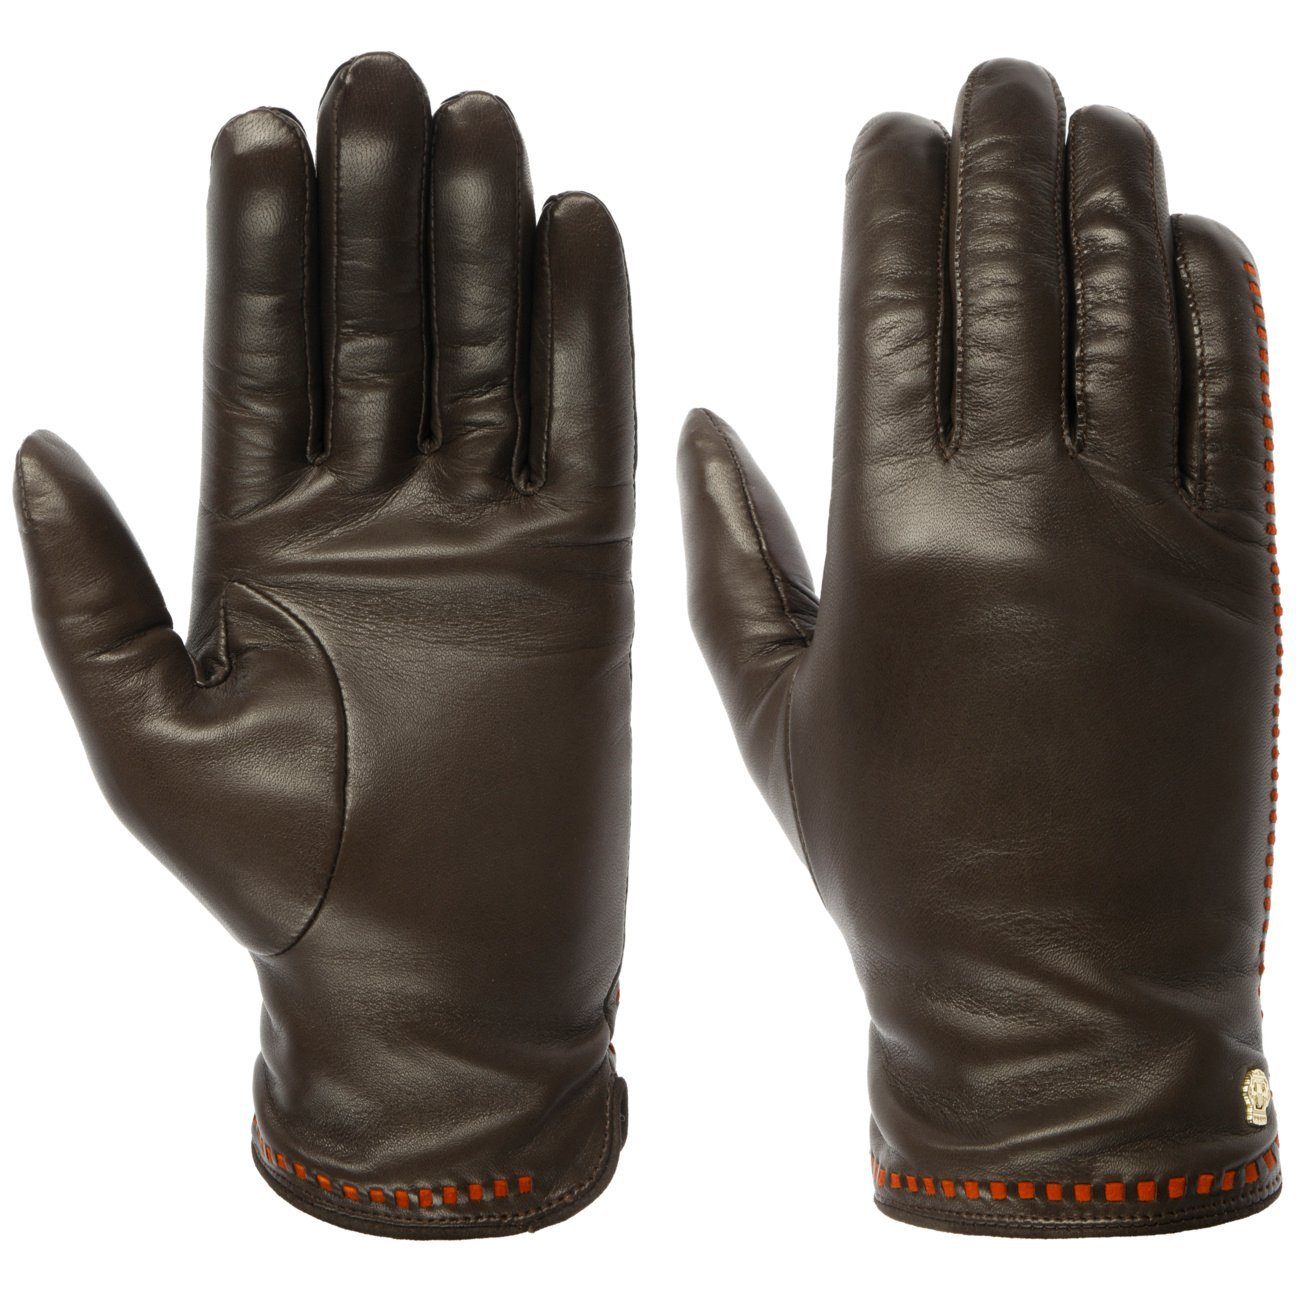 Roeckl Lederhandschuhe Handschuhe mit Futter braun